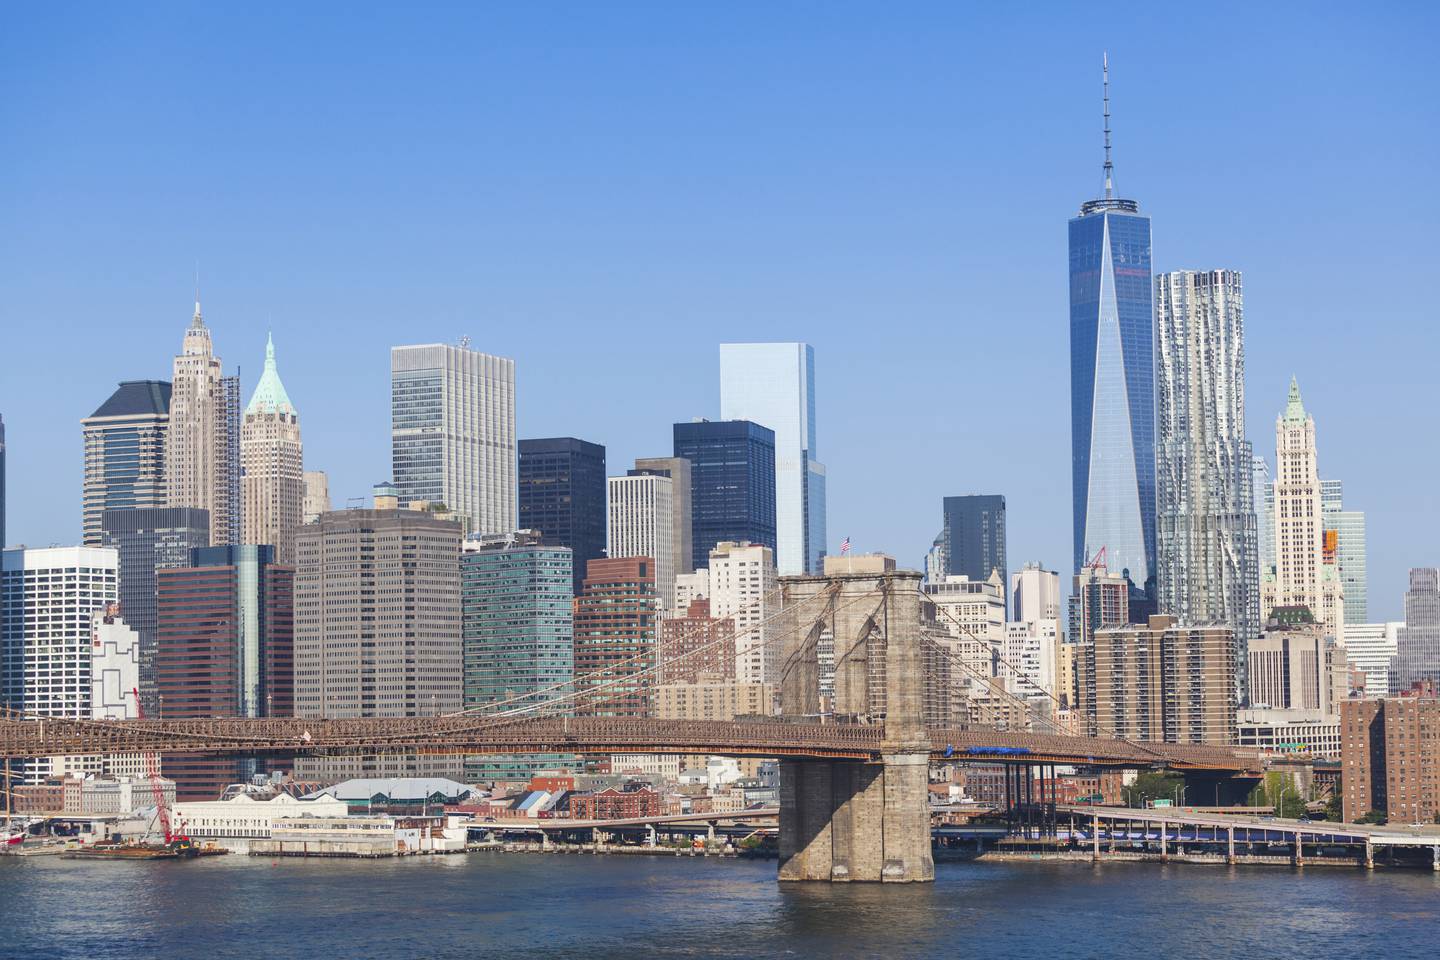 Brooklyn Bridge and Downtown New York City Skyline (iStockphoto.com)